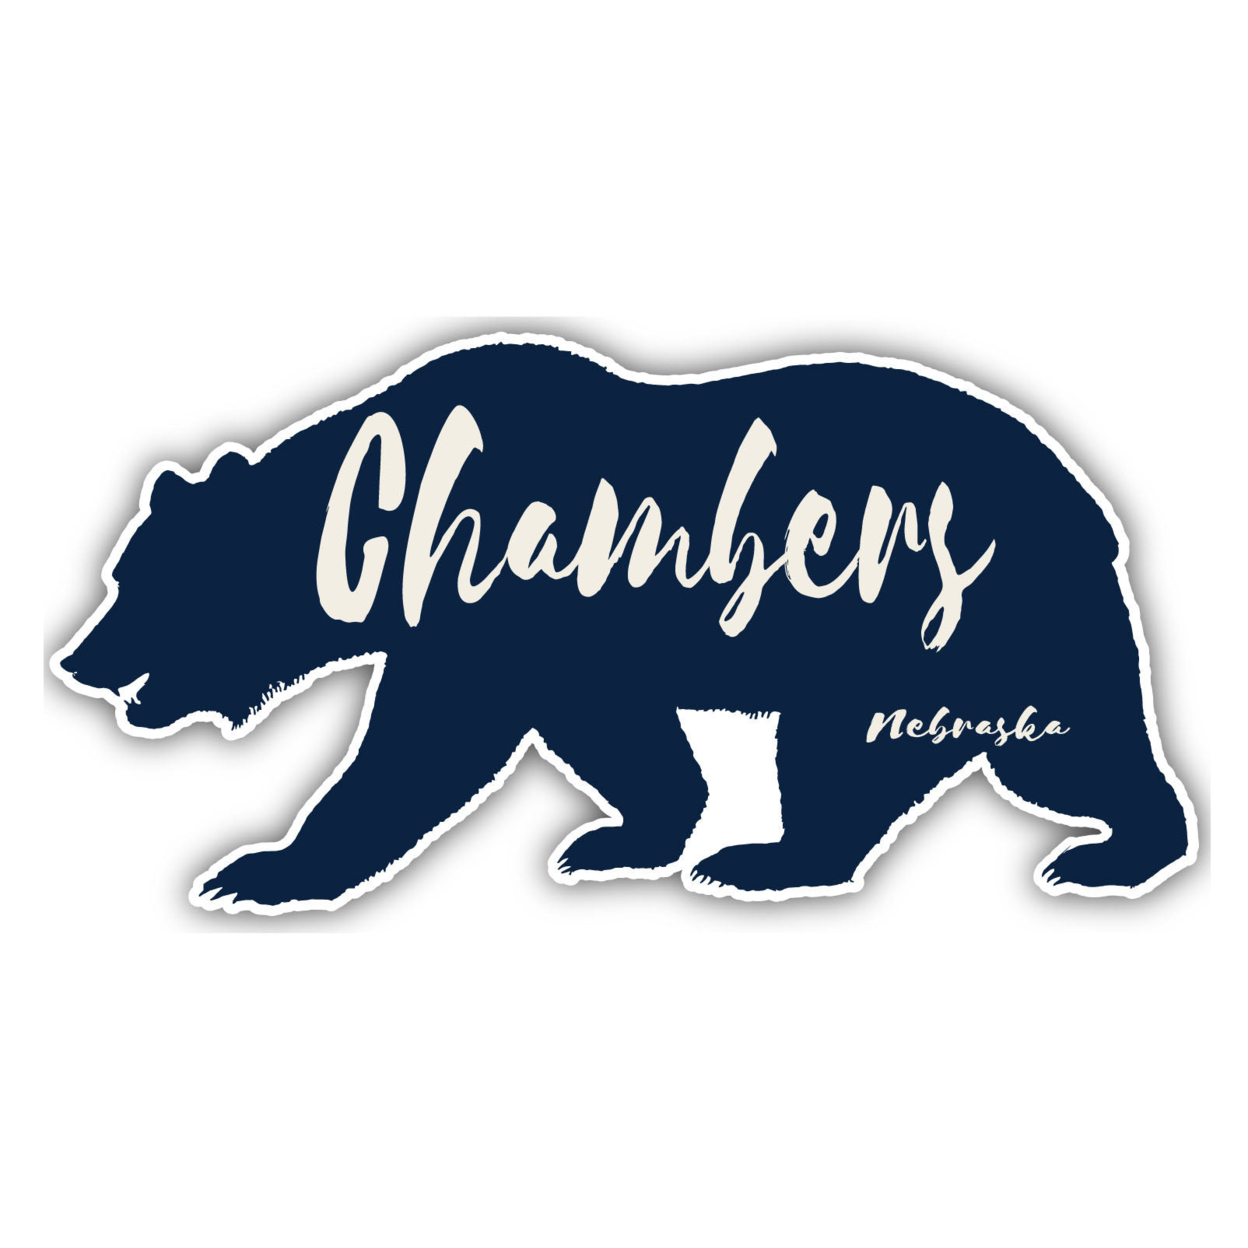 Chambers Nebraska Souvenir Decorative Stickers (Choose Theme And Size) - 4-Pack, 10-Inch, Bear